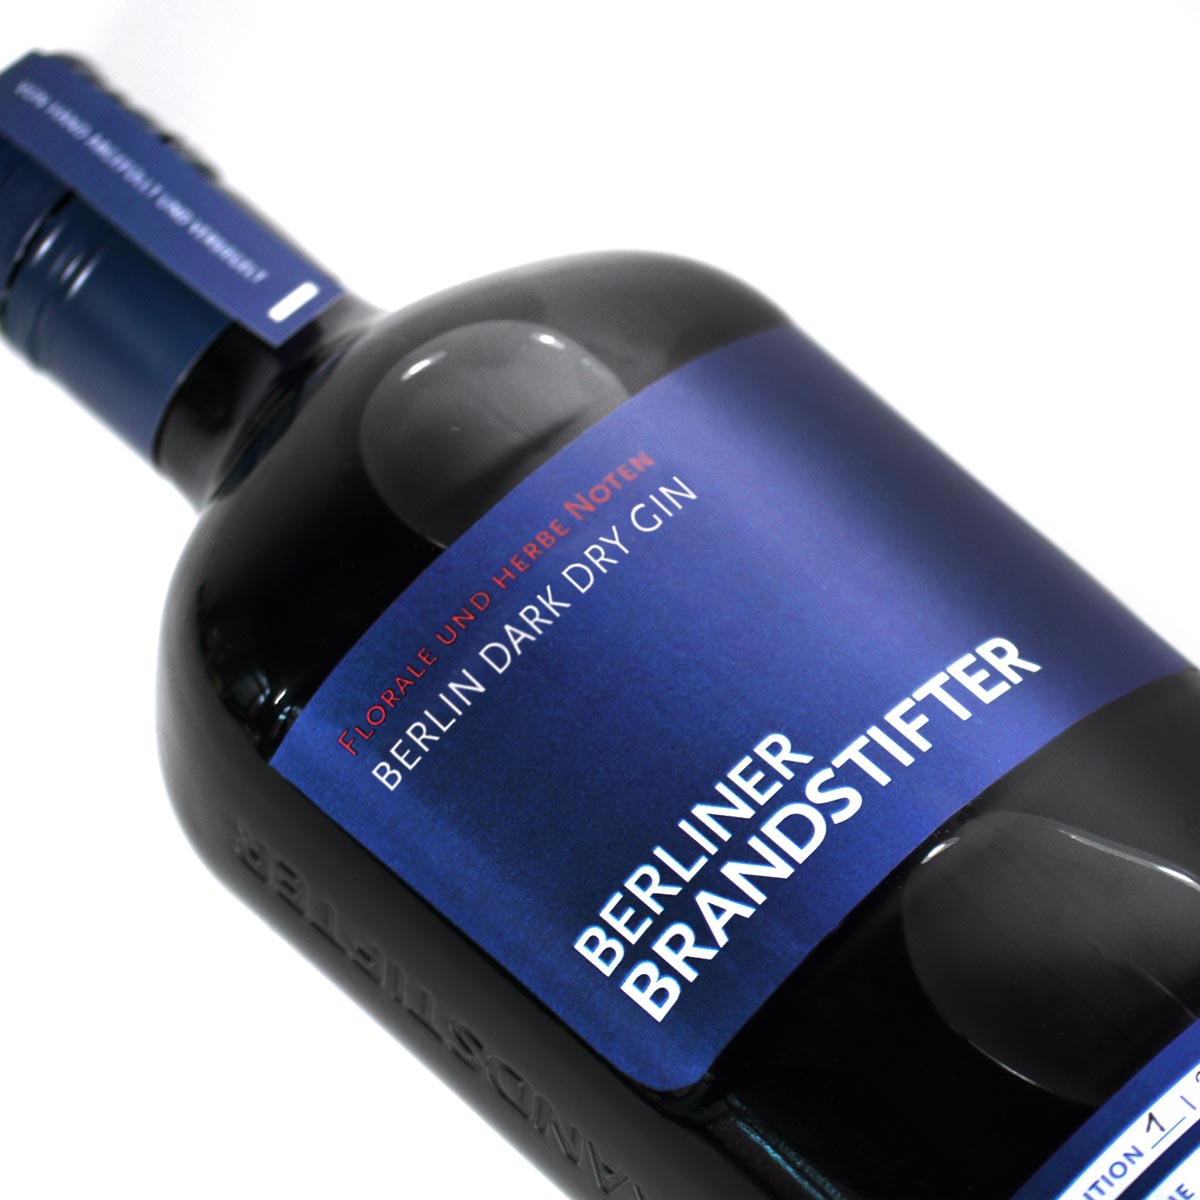 BERLINER BRANDSTIFTER Dark Dry Gin